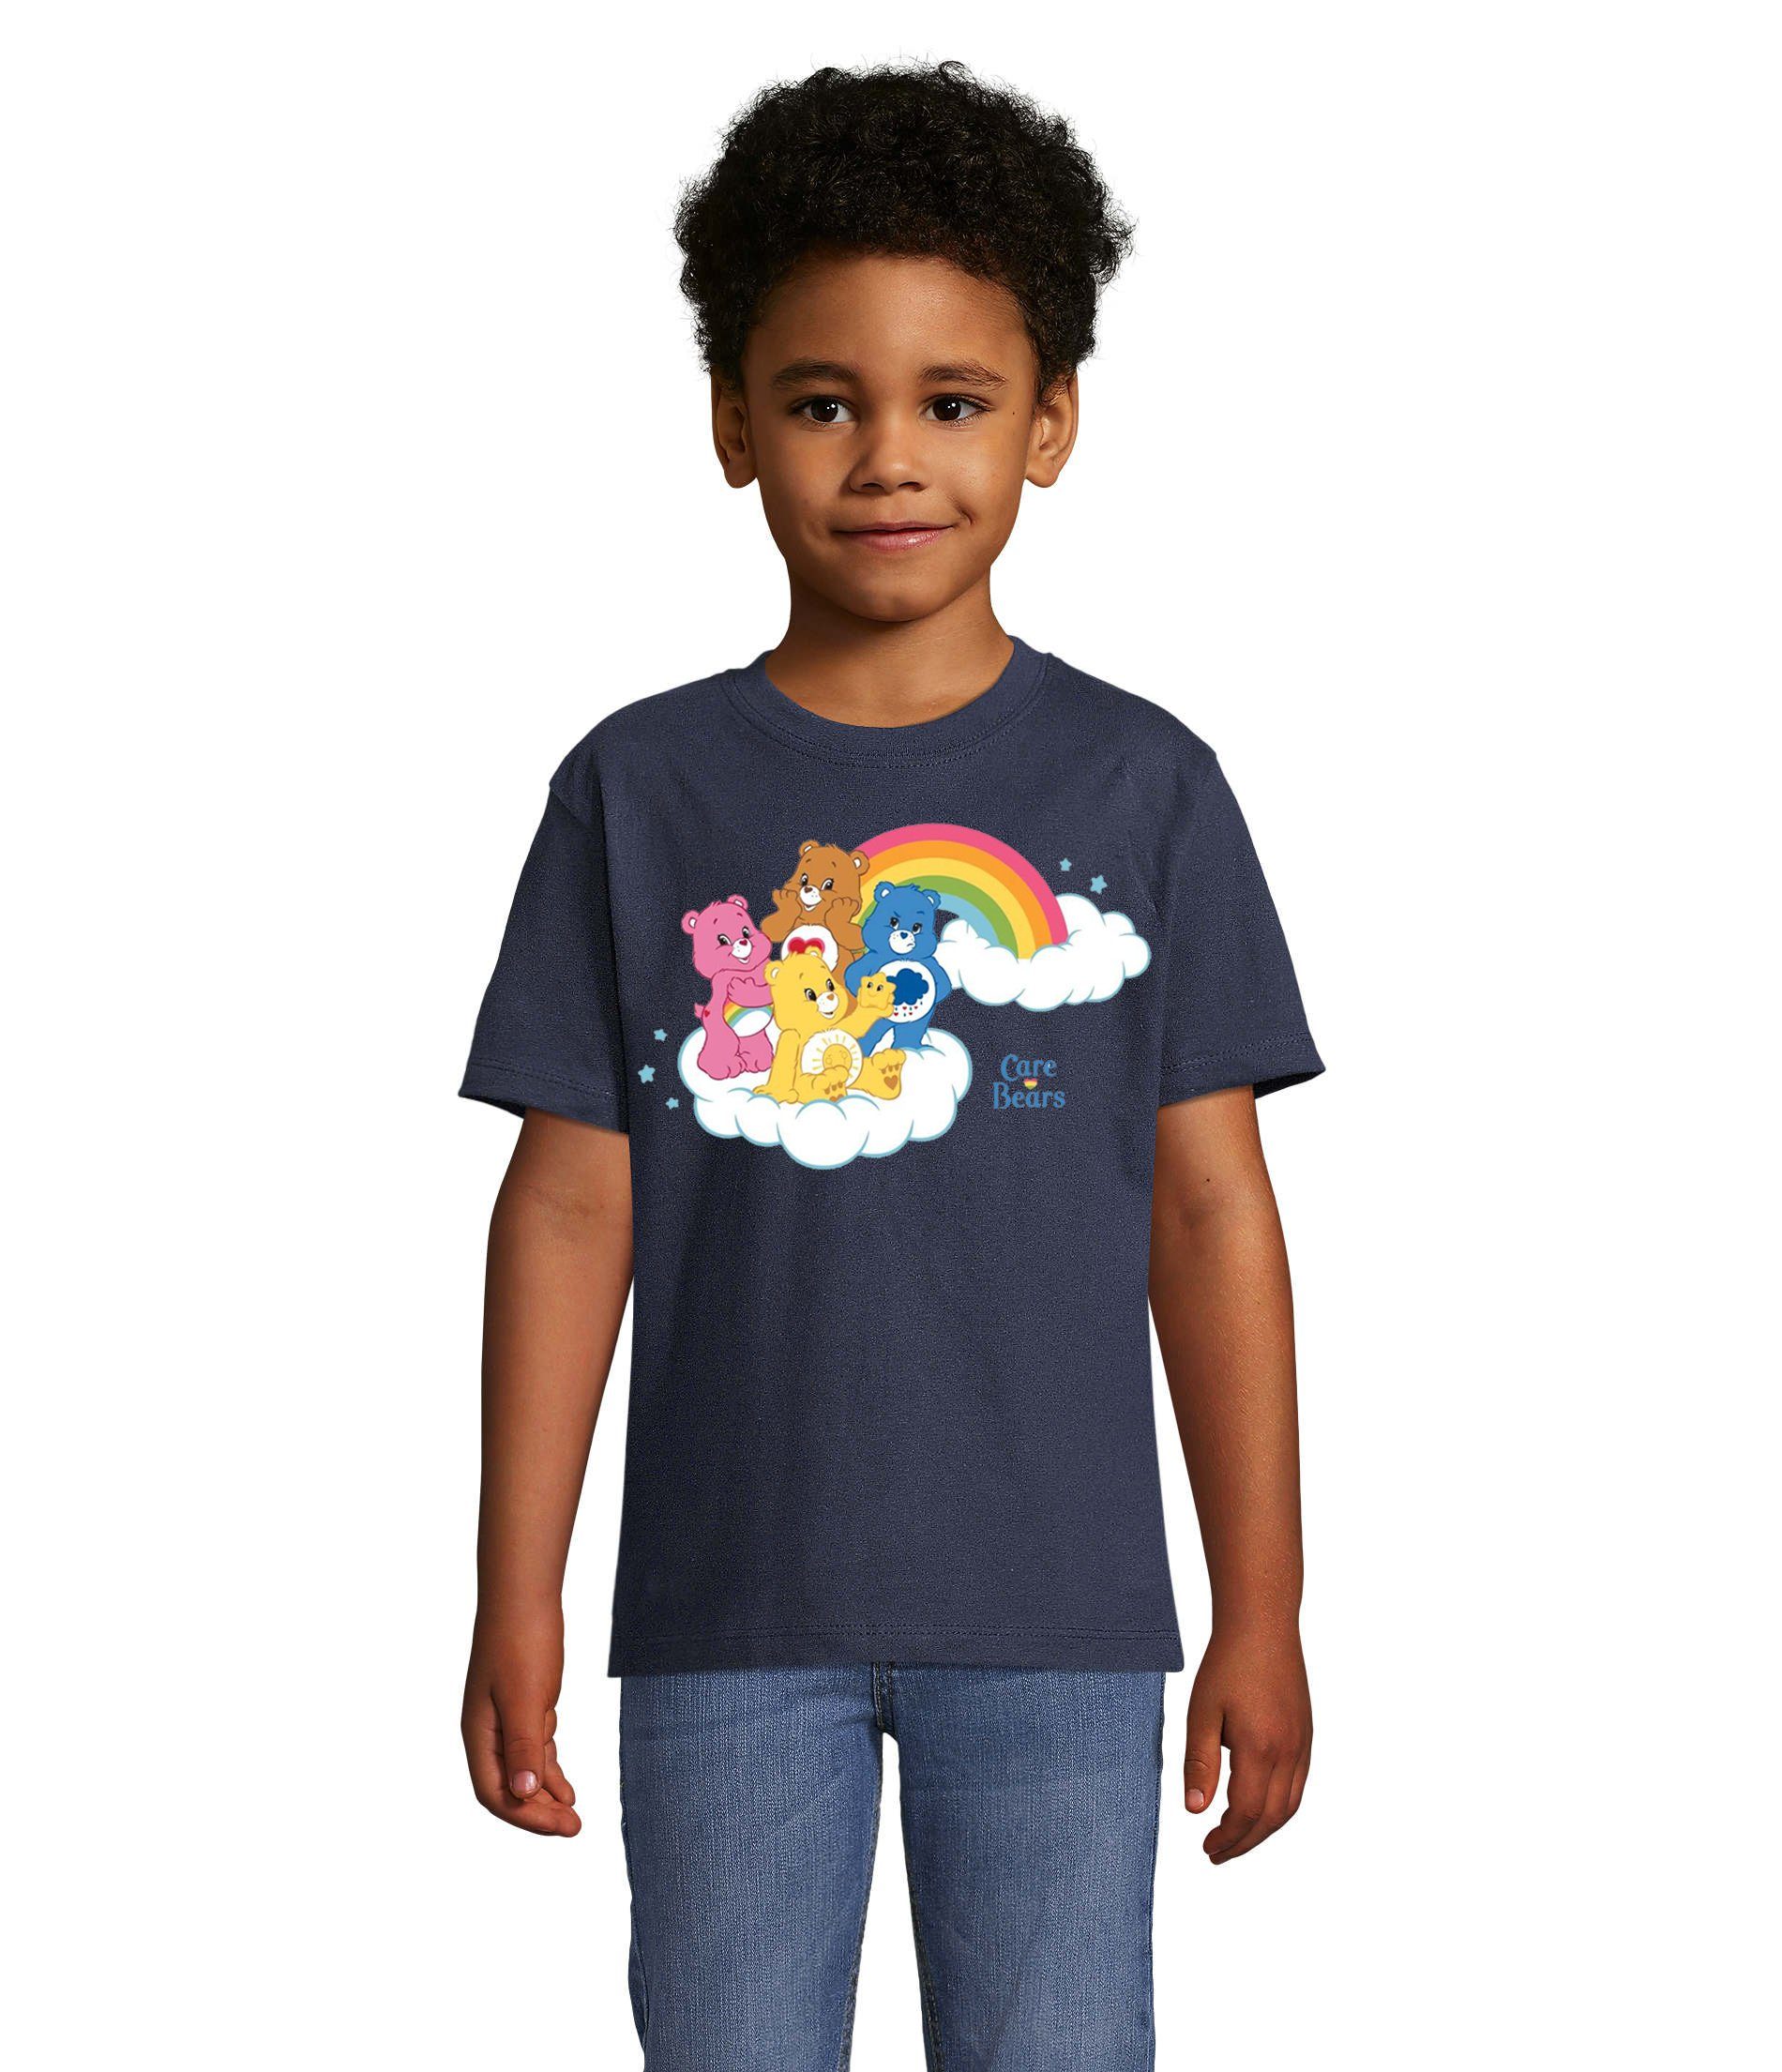 Wolkenland T-Shirt Navyblau Blondie & Hab-Dich-lieb Glücksbärchis Bärchis Kinder Care Brownie Bears